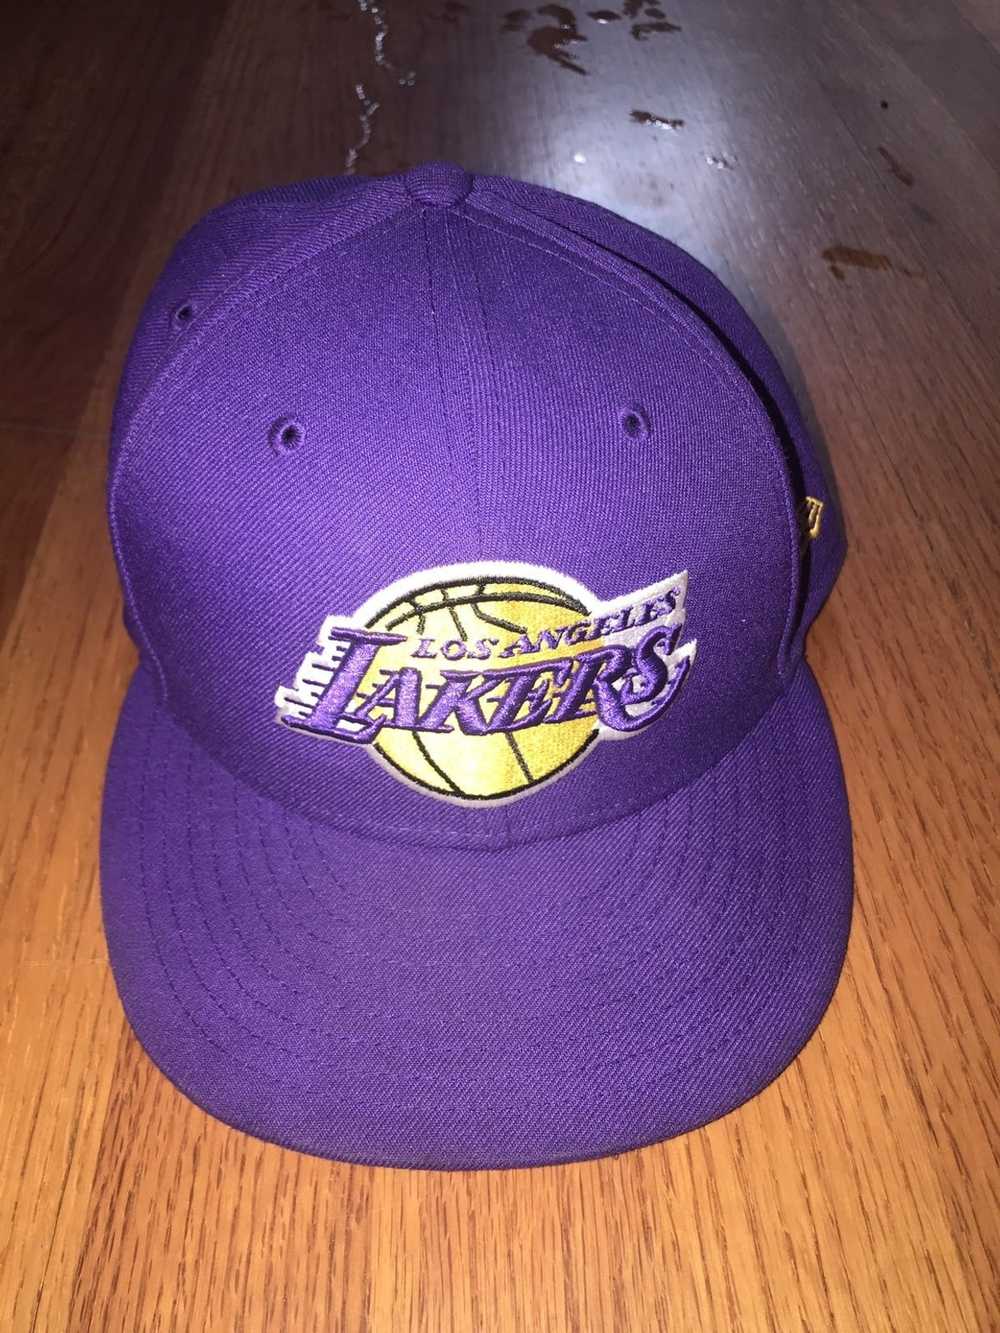 L.A. Lakers × NBA Lakers New Era Hat - image 1